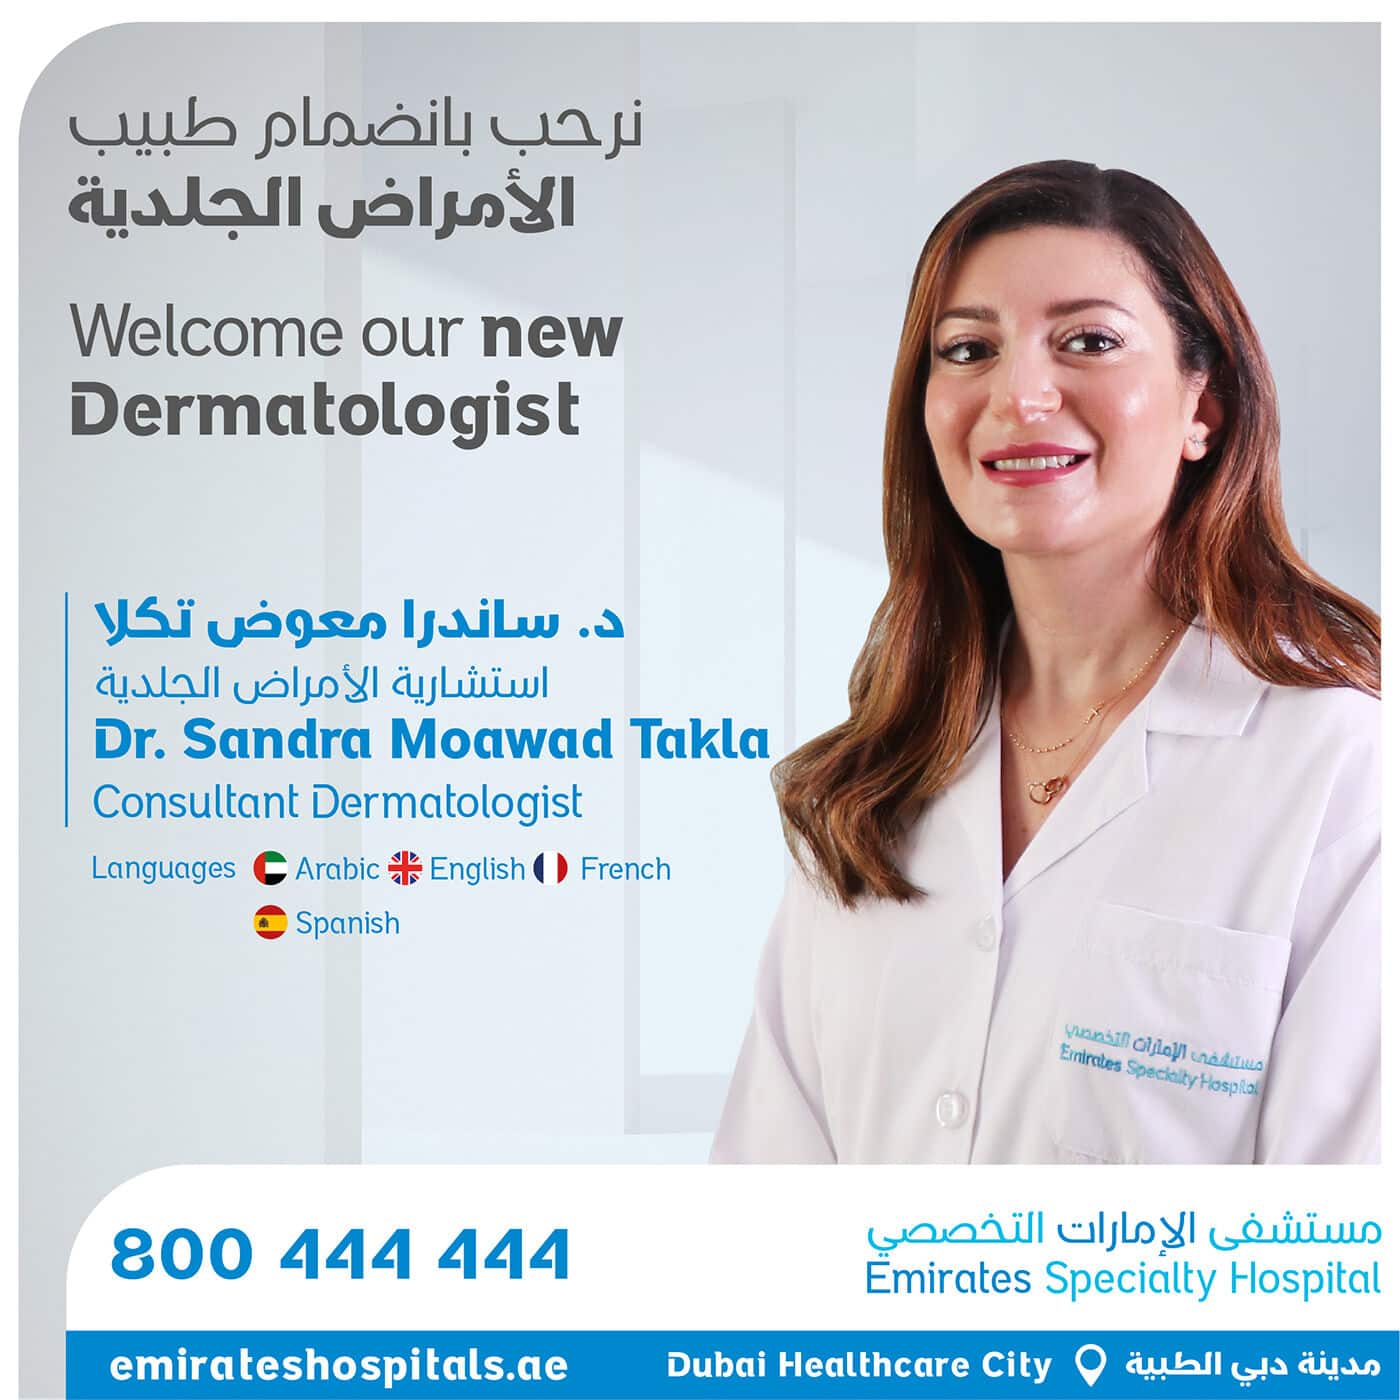 Dr. Sandra Moawad Takla, Consultant Dermatologist Emirates Specialty Hospital